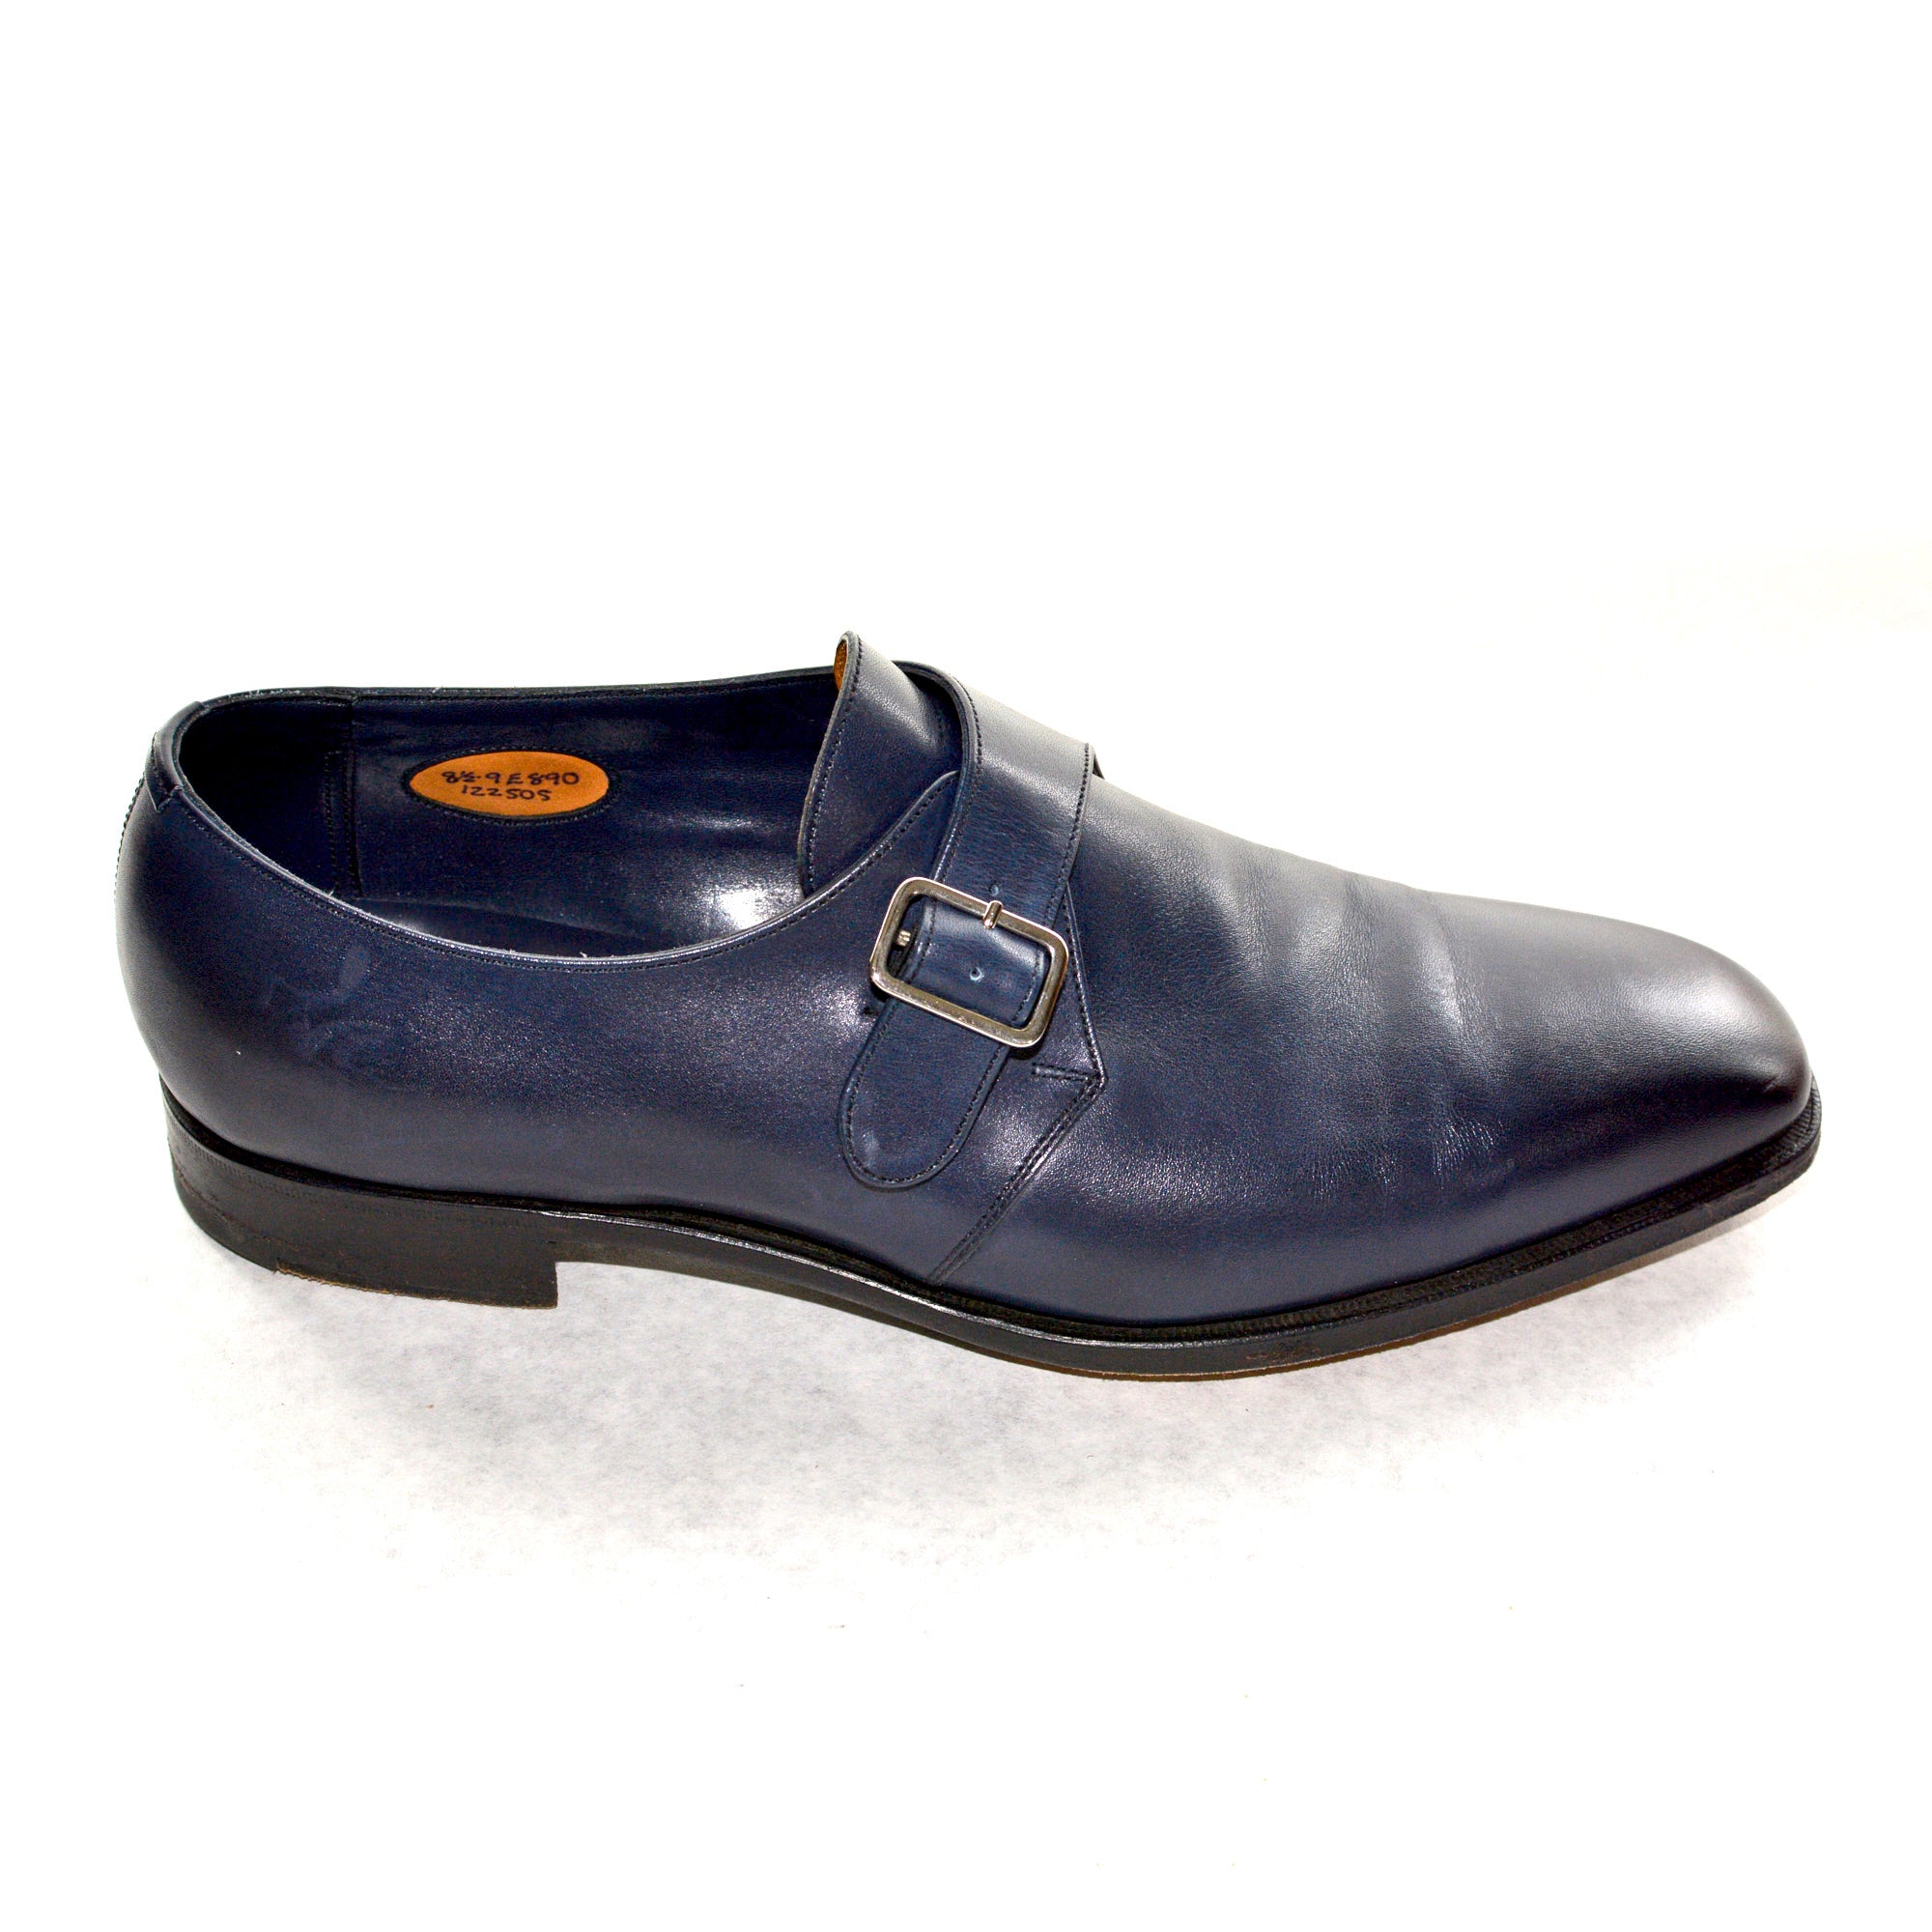 EDWARD GREEN Last 890 Navy Blue Leather Single Monk Dress Shoes UK 8.5 US 9 EDWARD GREEN